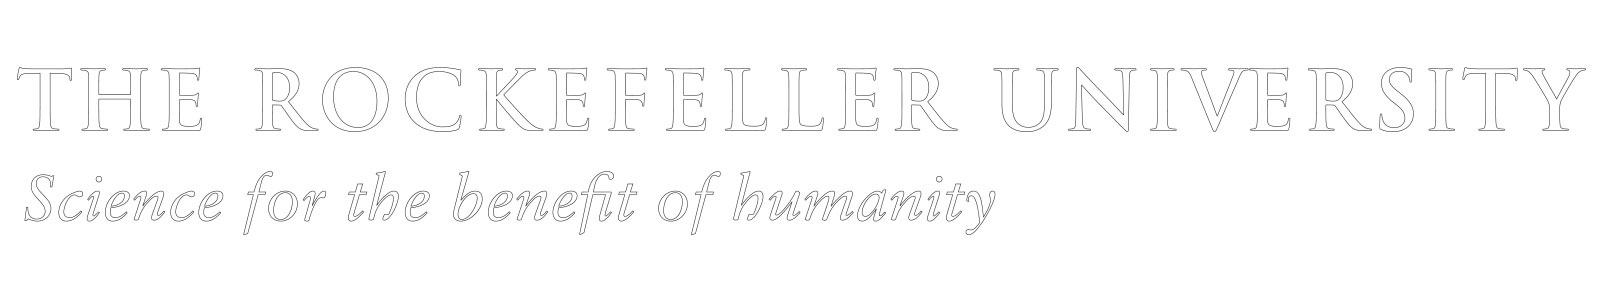 White typeface logo with tagline